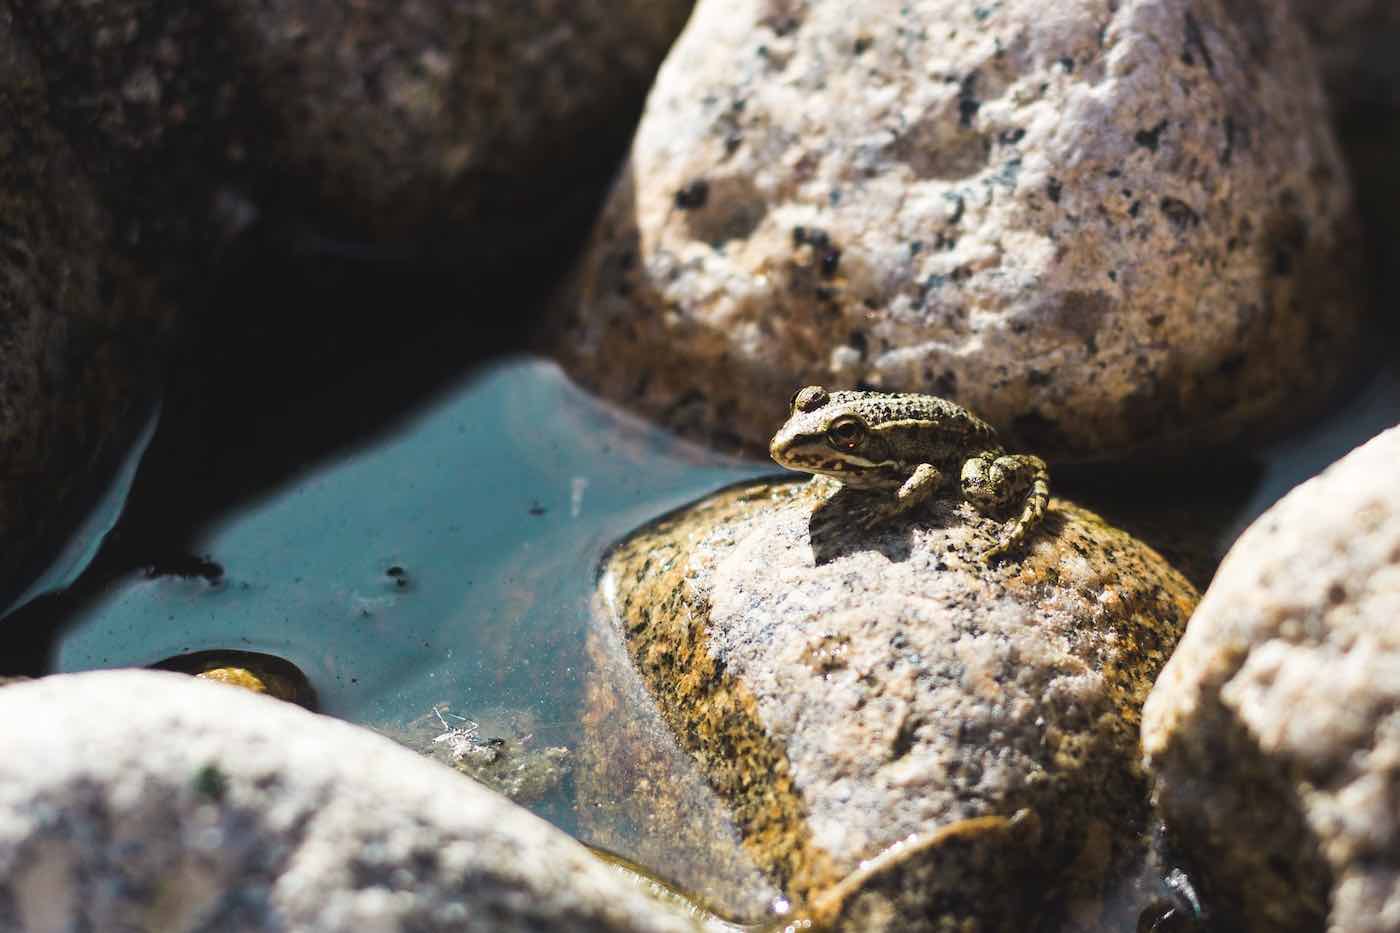 Frog on stone near pond